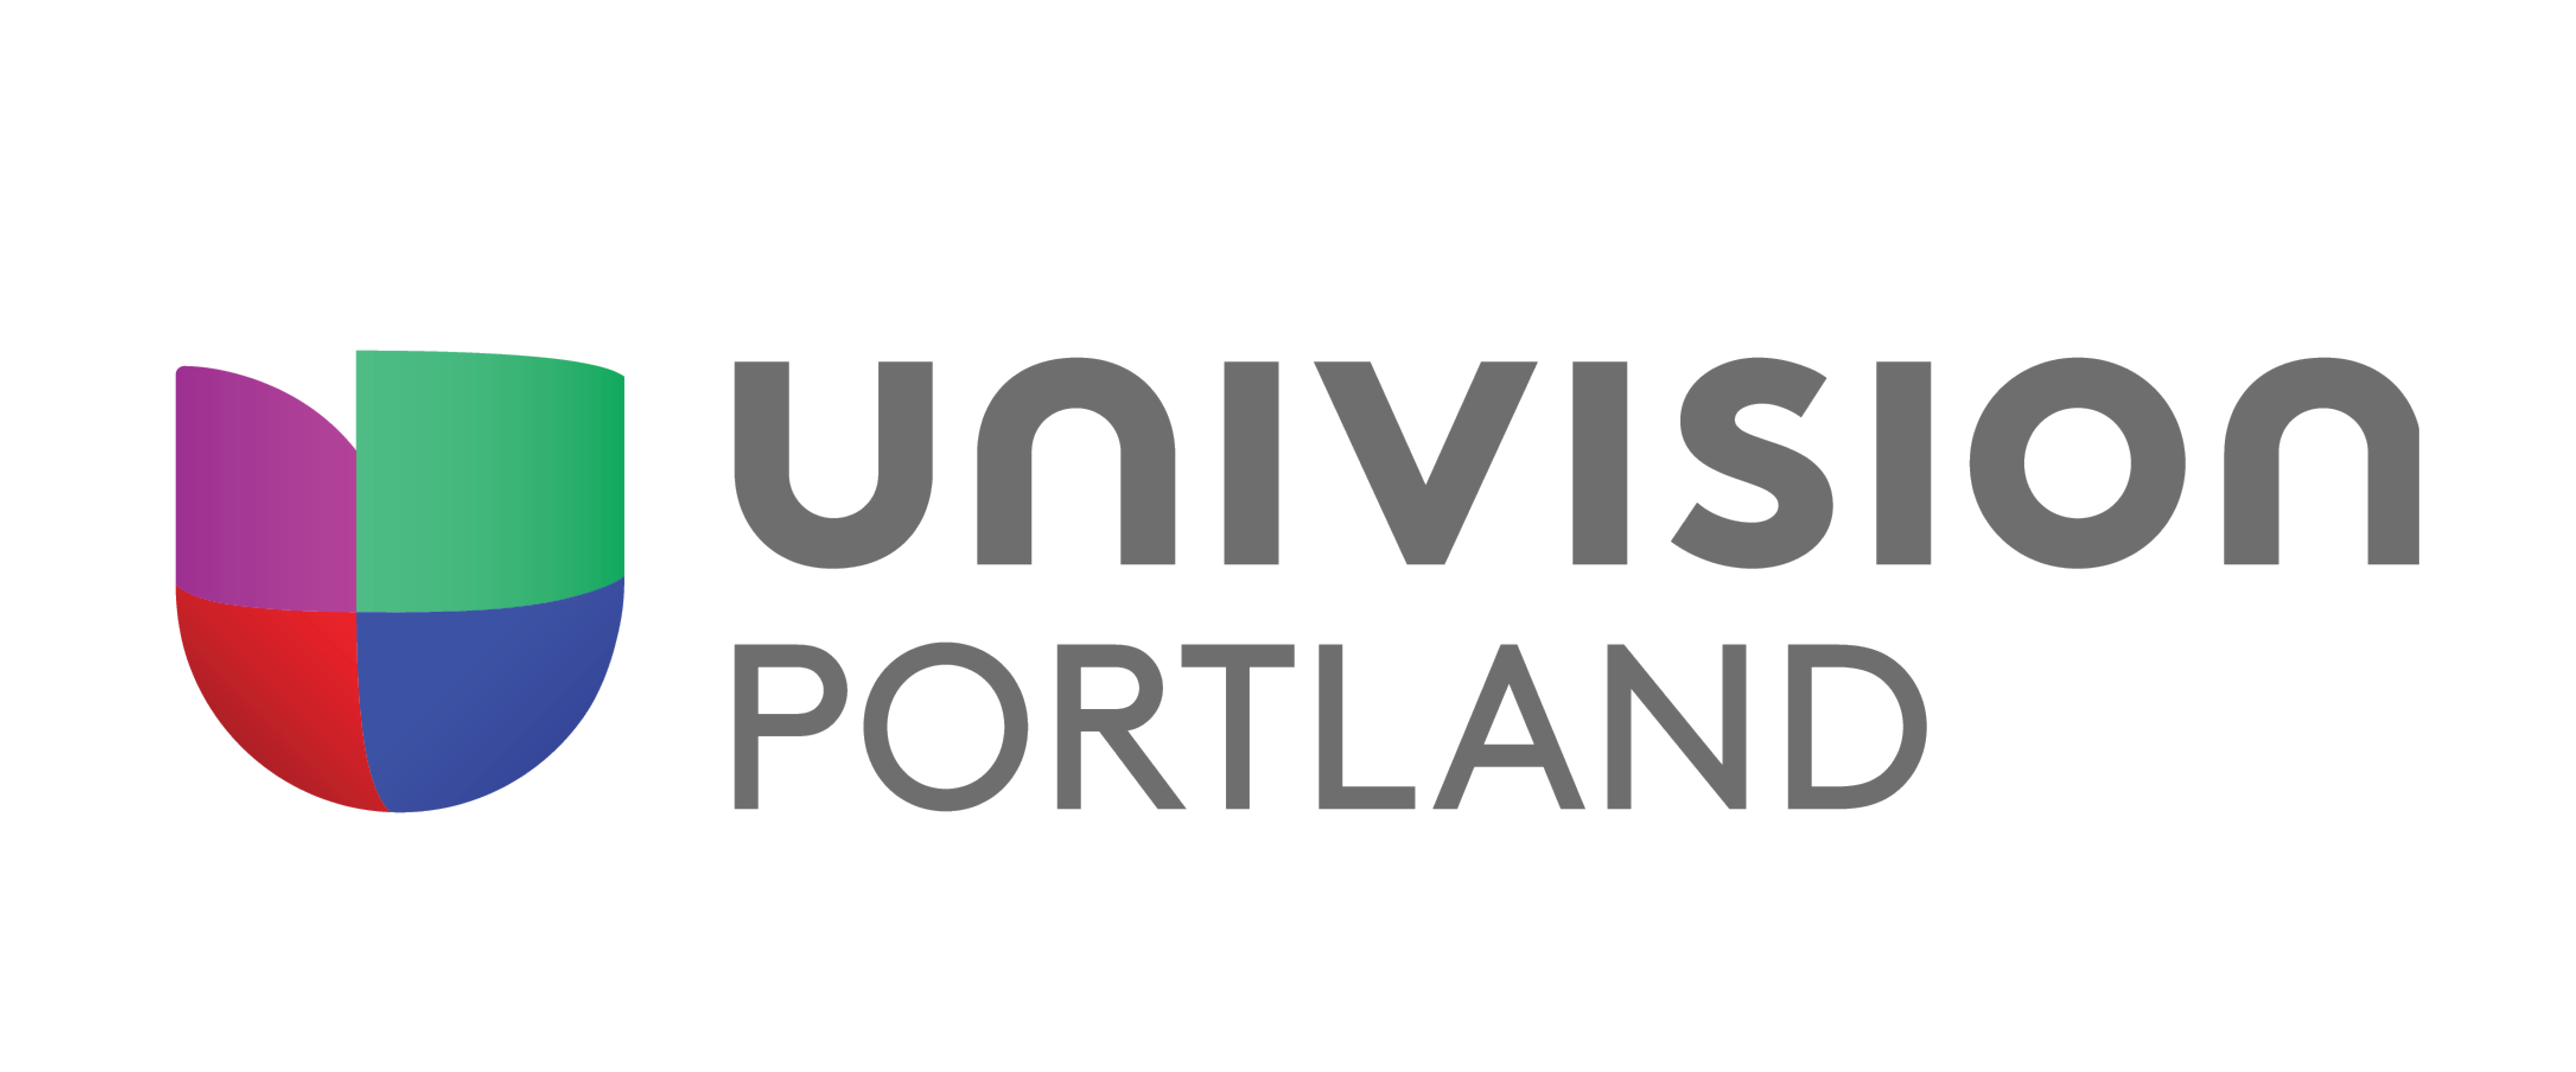 Univision Portland logo